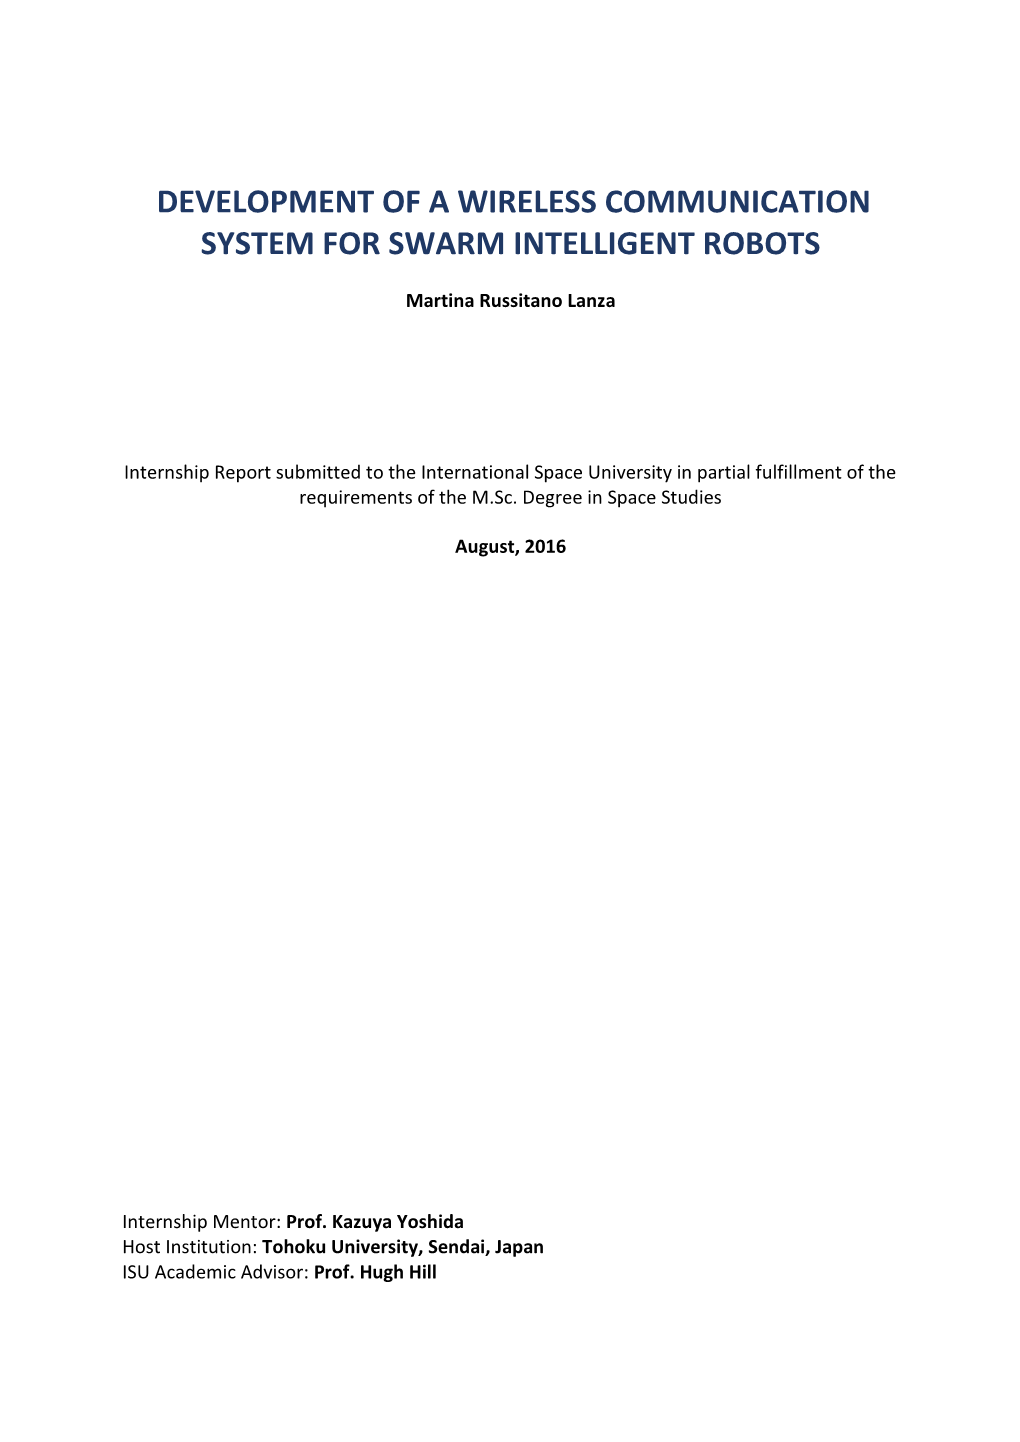 Development of a Wireless Communication System for Swarm Intelligent Robots